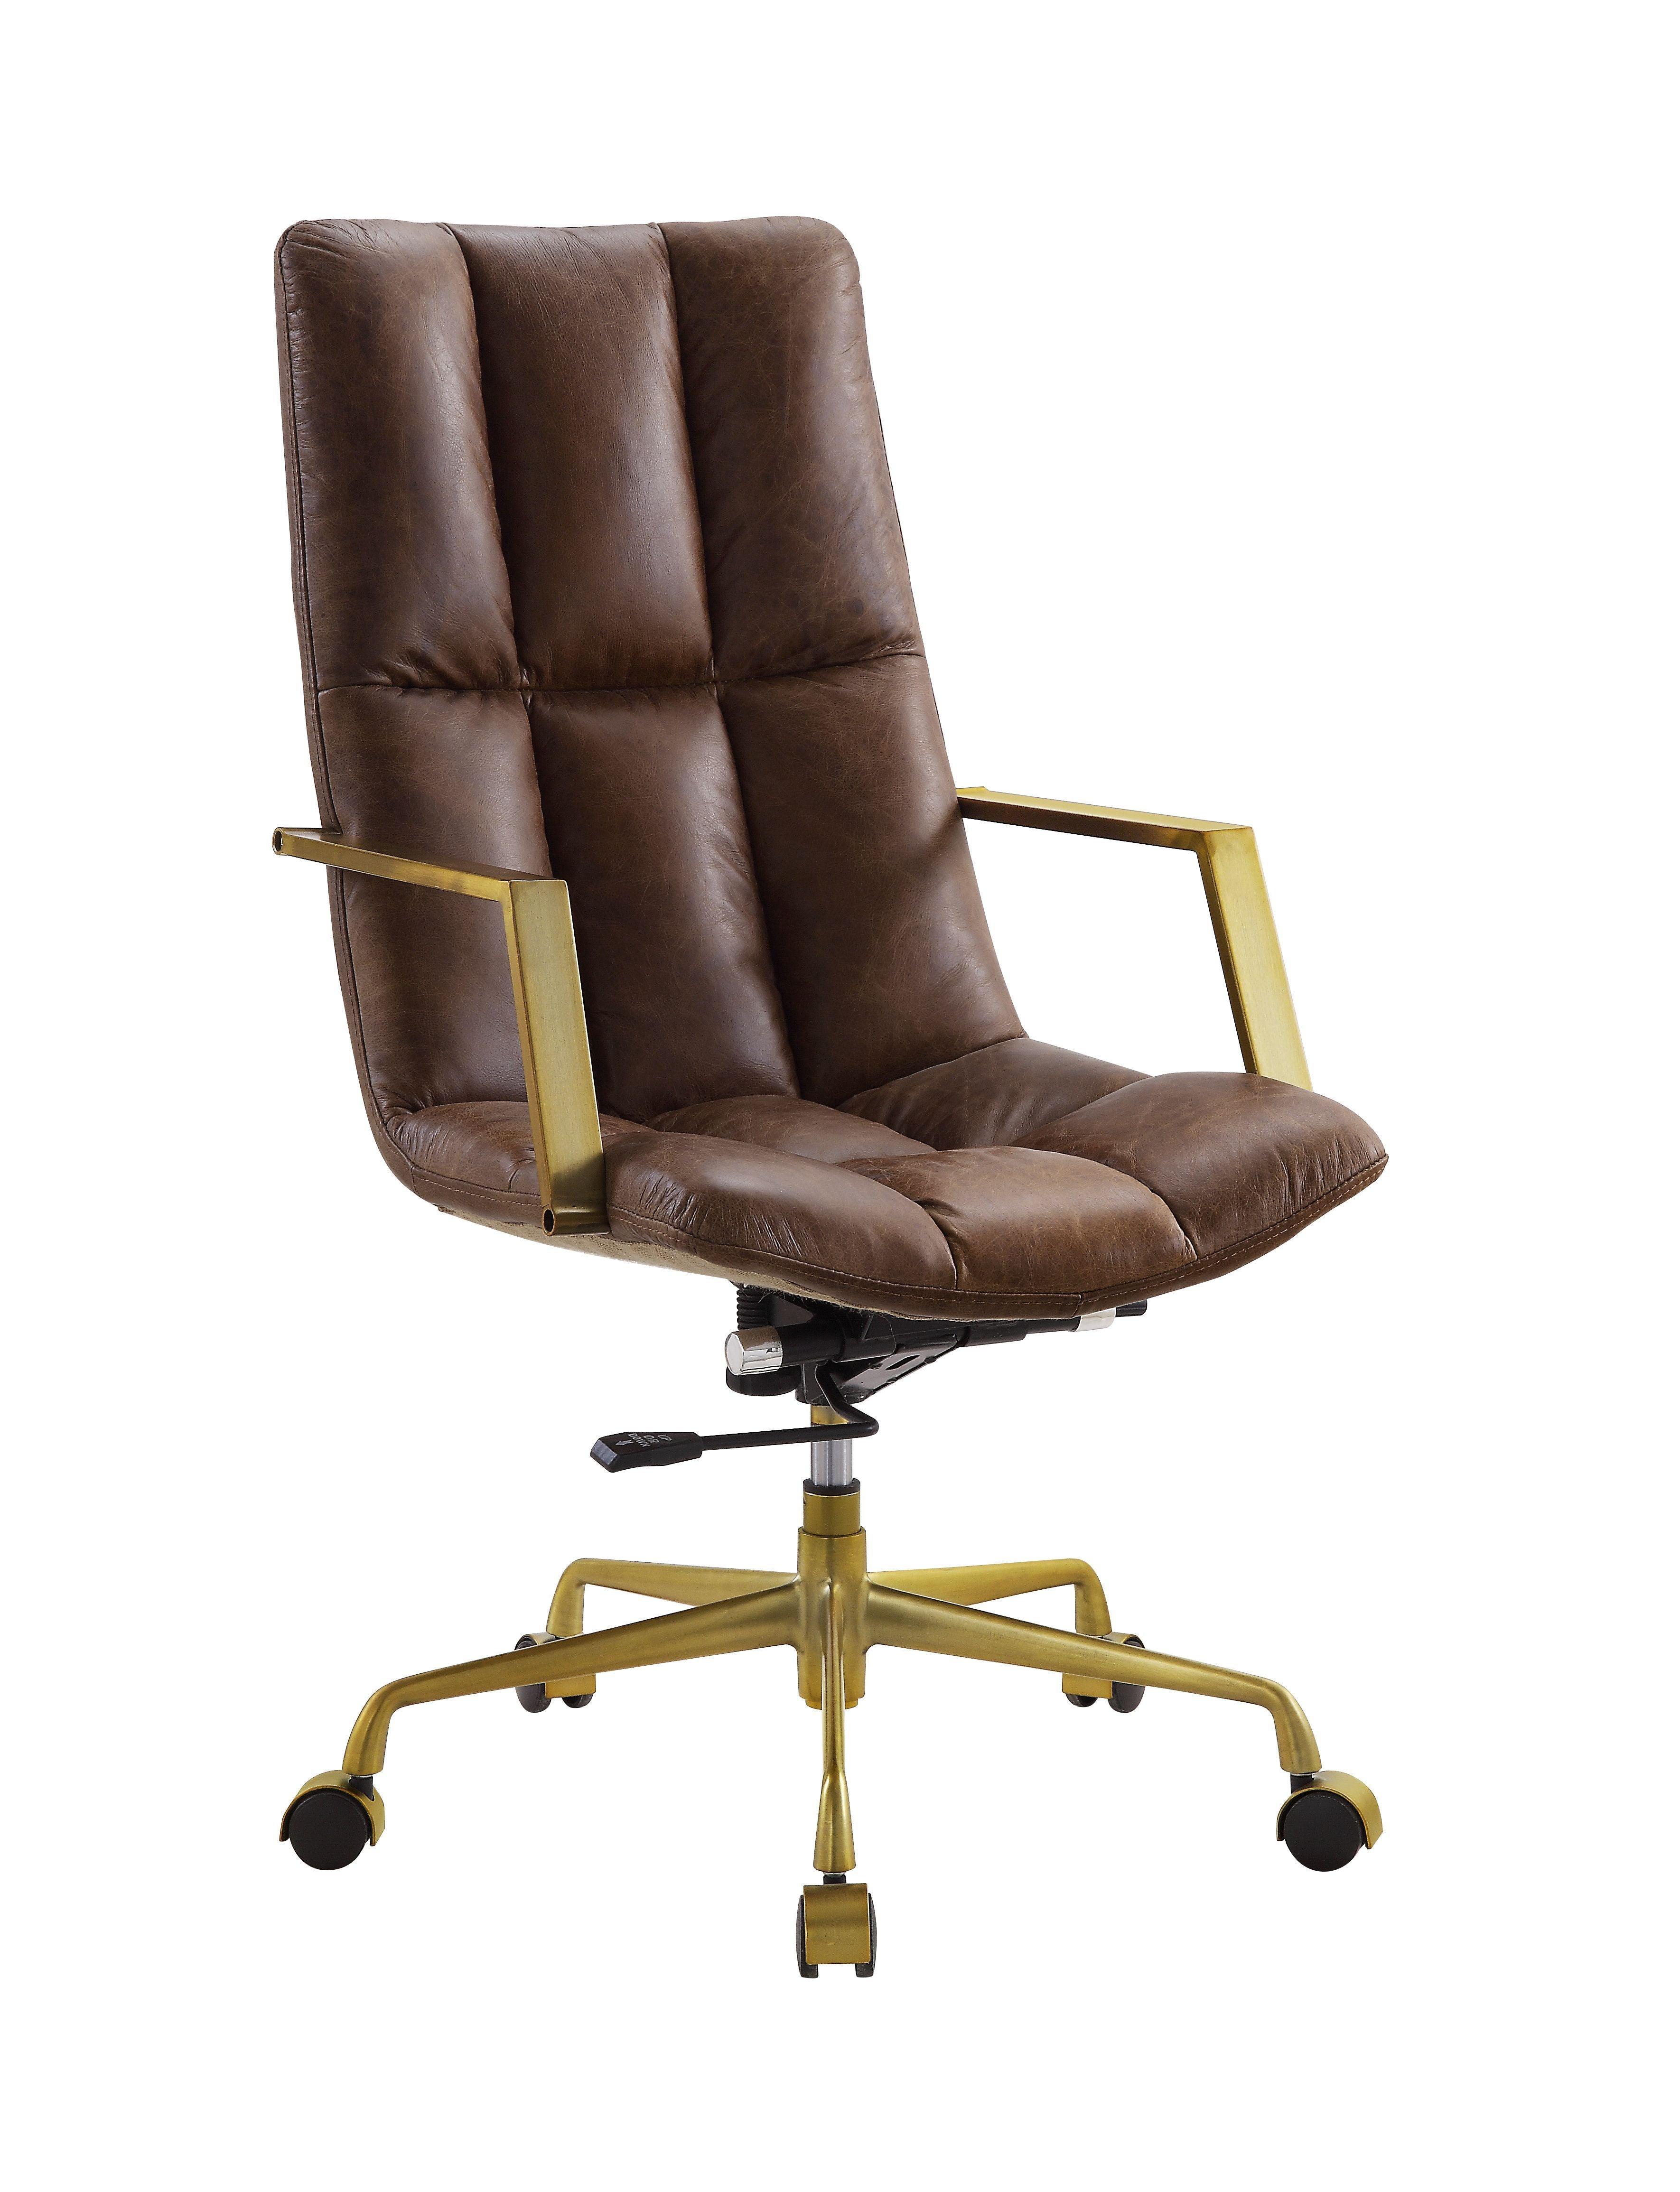 ACME - Rolento - Executive Office Chair - Espresso Top Grain Leather - 5th Avenue Furniture